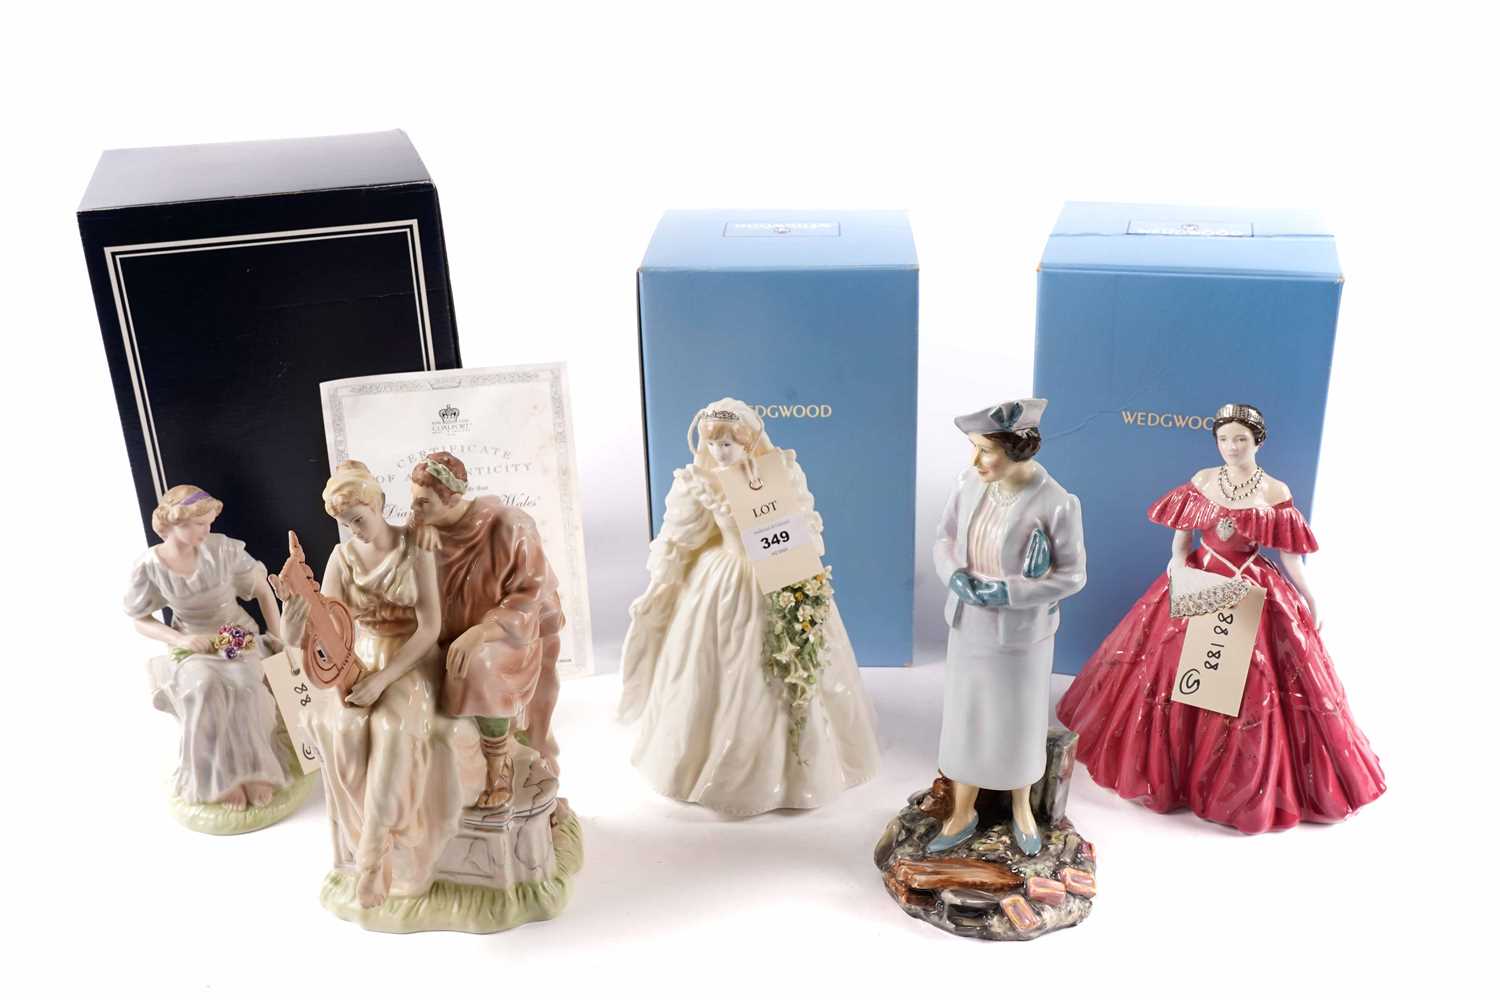 A collection of decorative ceramic figures